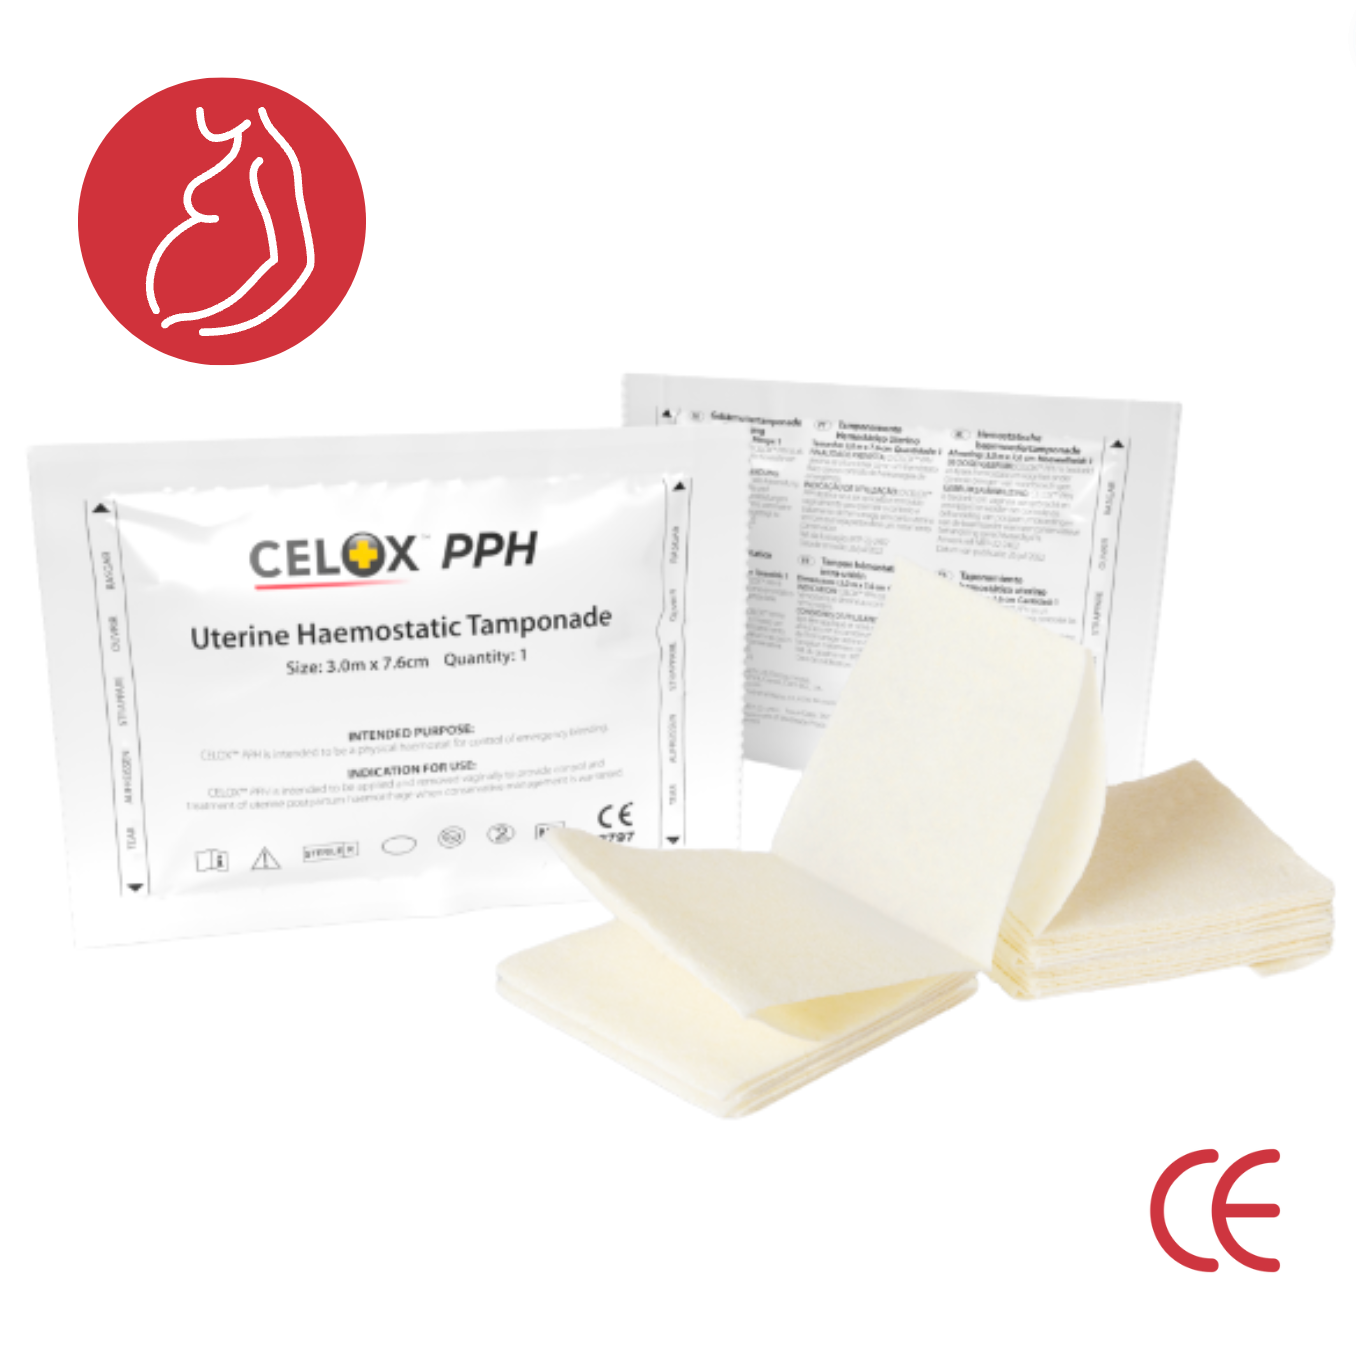 Image of Celox PPH Uterine Haemostatic Tamponade Maternal Health CE marking